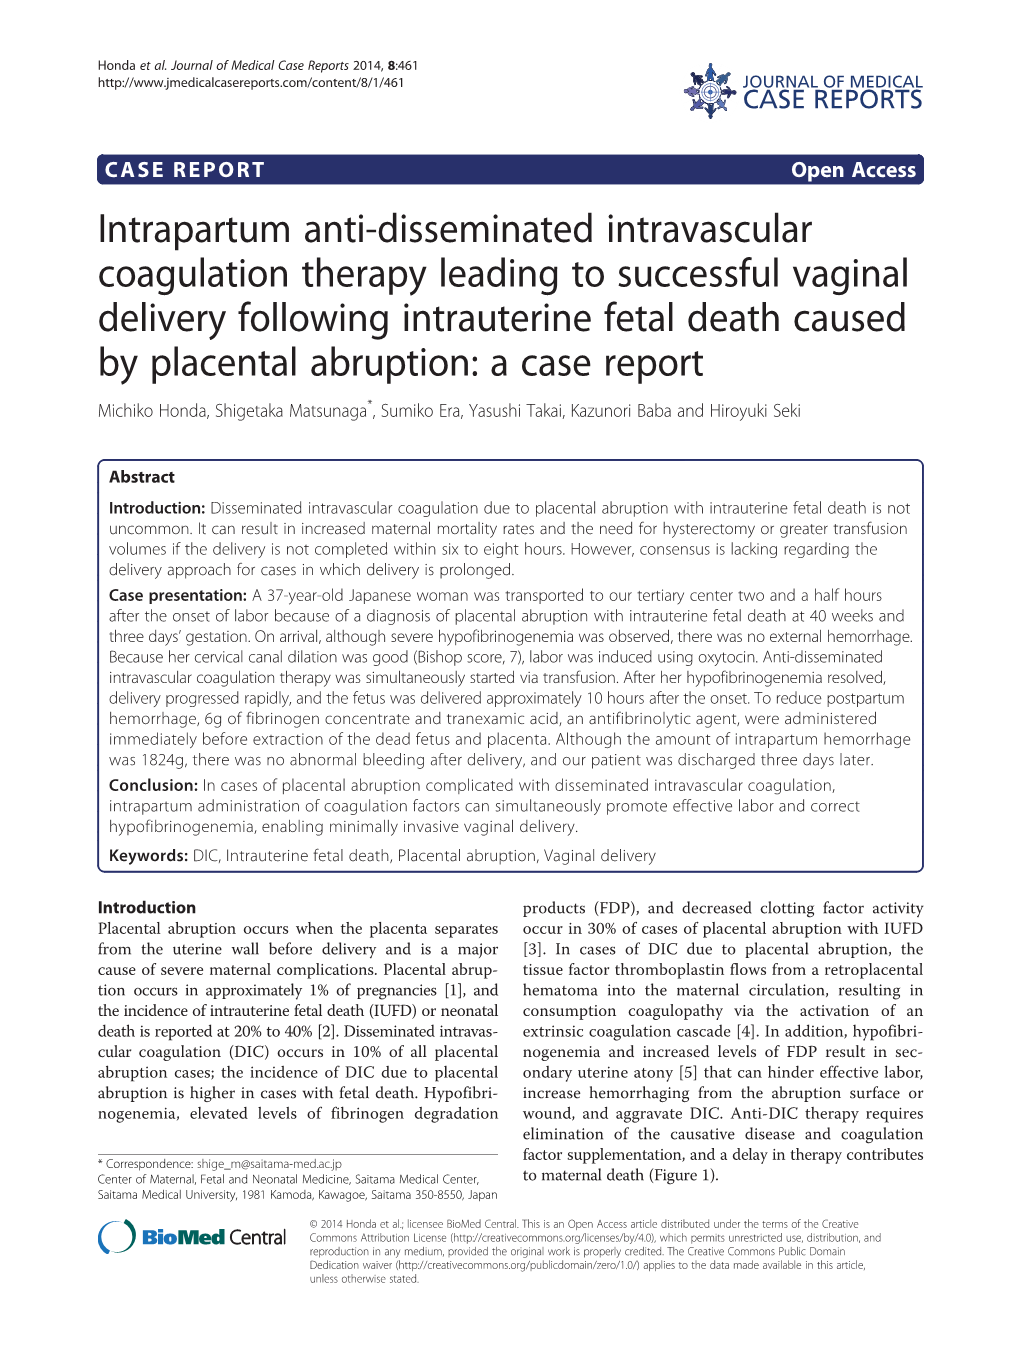 Intrapartum Anti-Disseminated Intravascular Coagulation Therapy